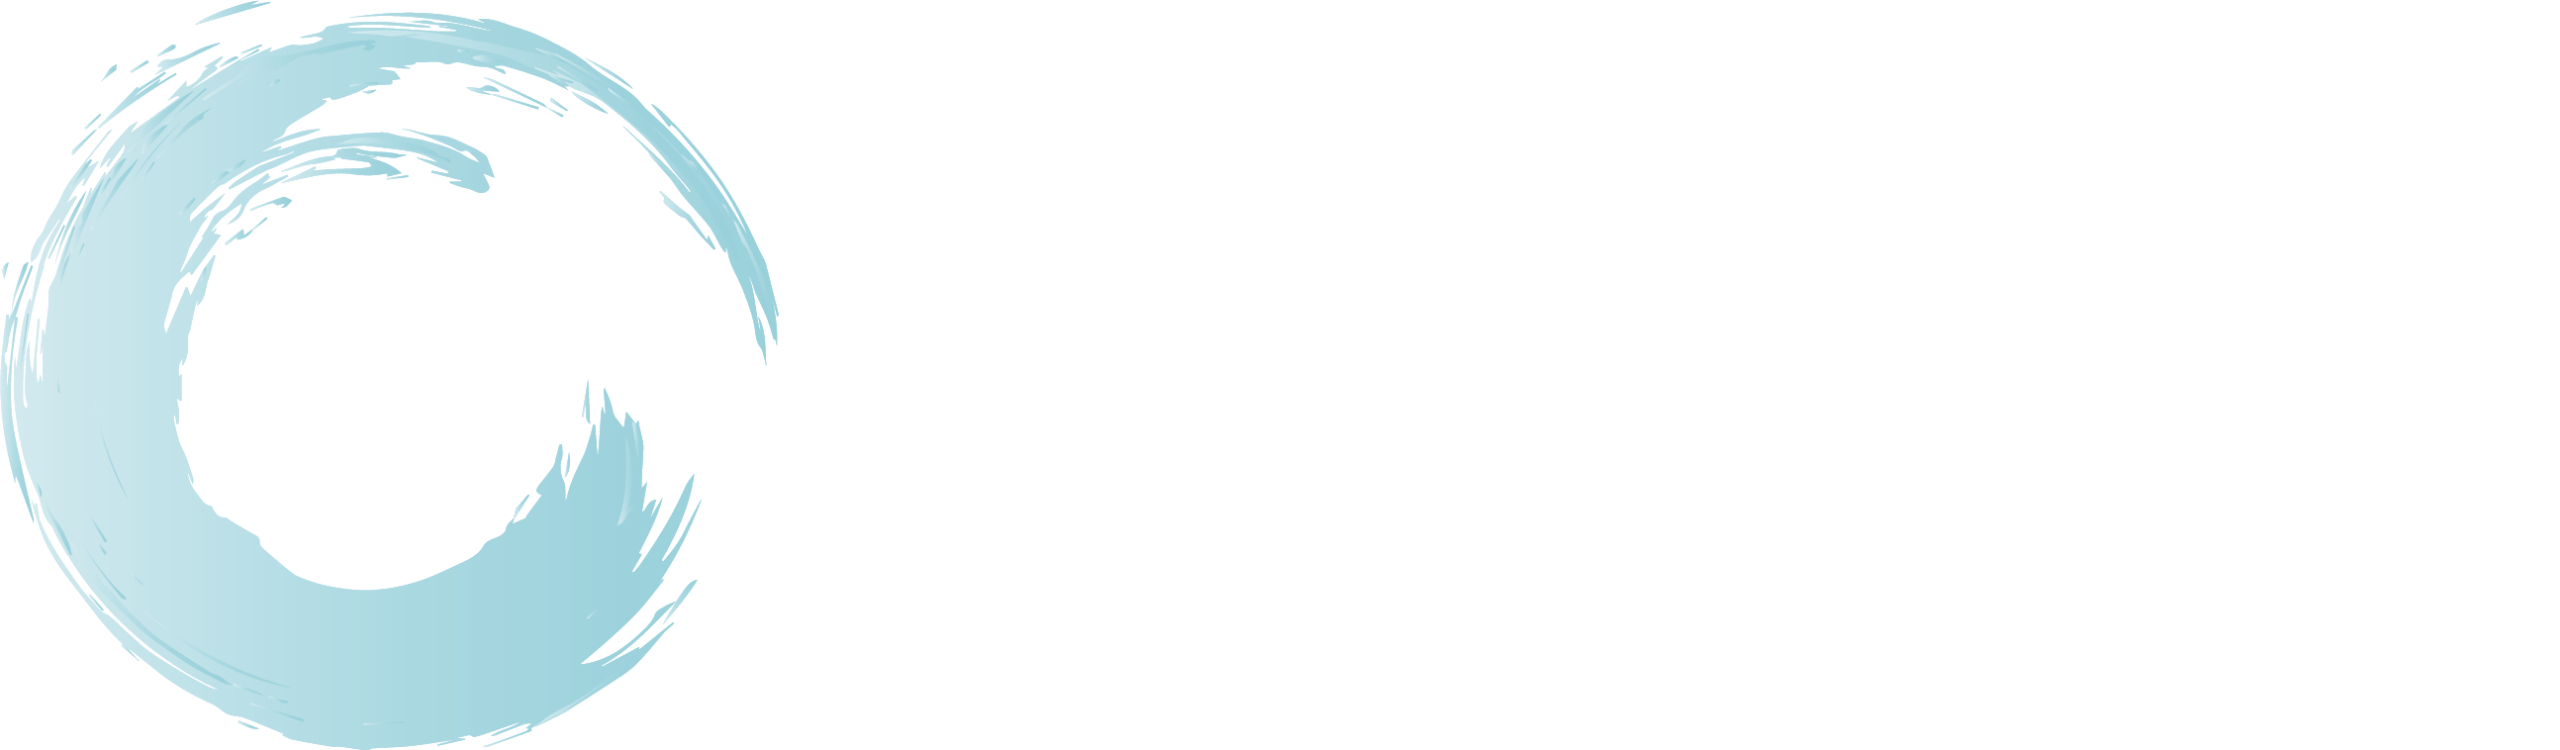 Waves Coaching